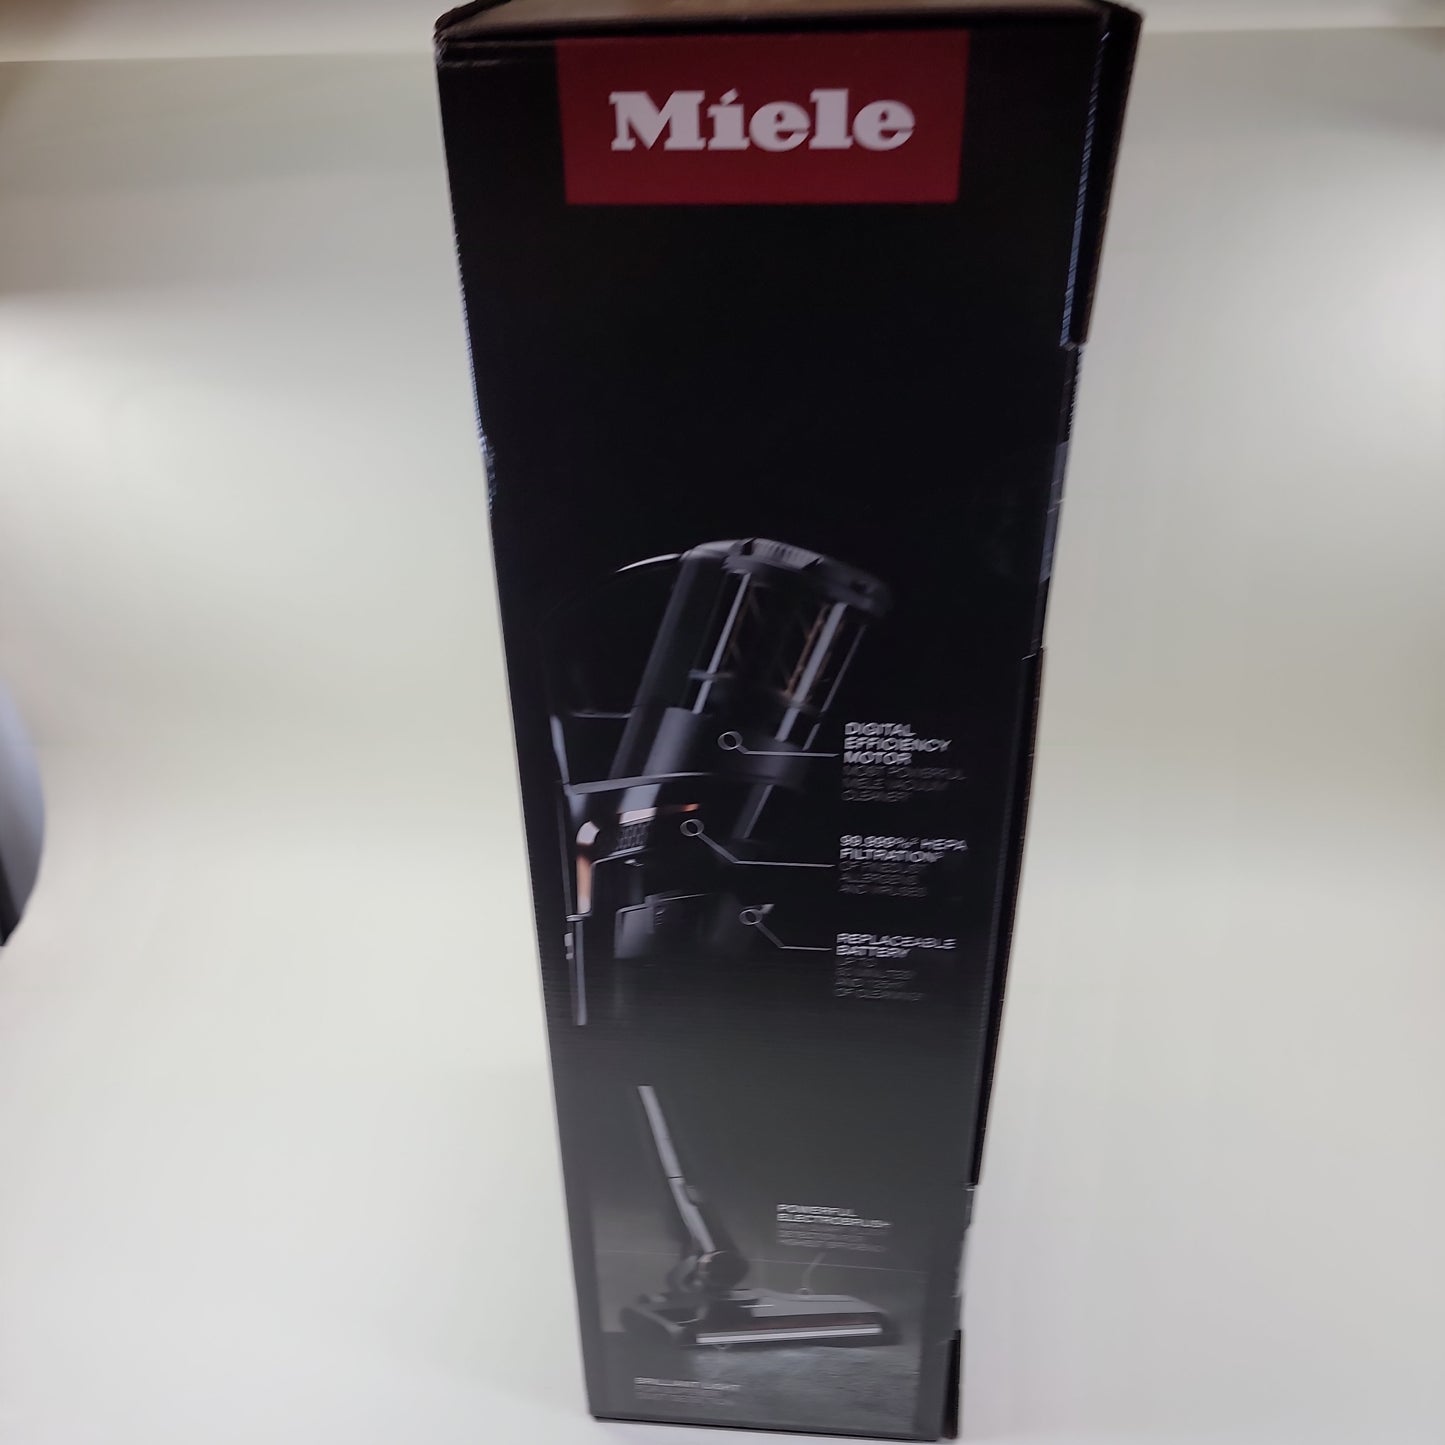 New Miele TriFlex H2 Runner Cordless Stick Vacuum SOML5